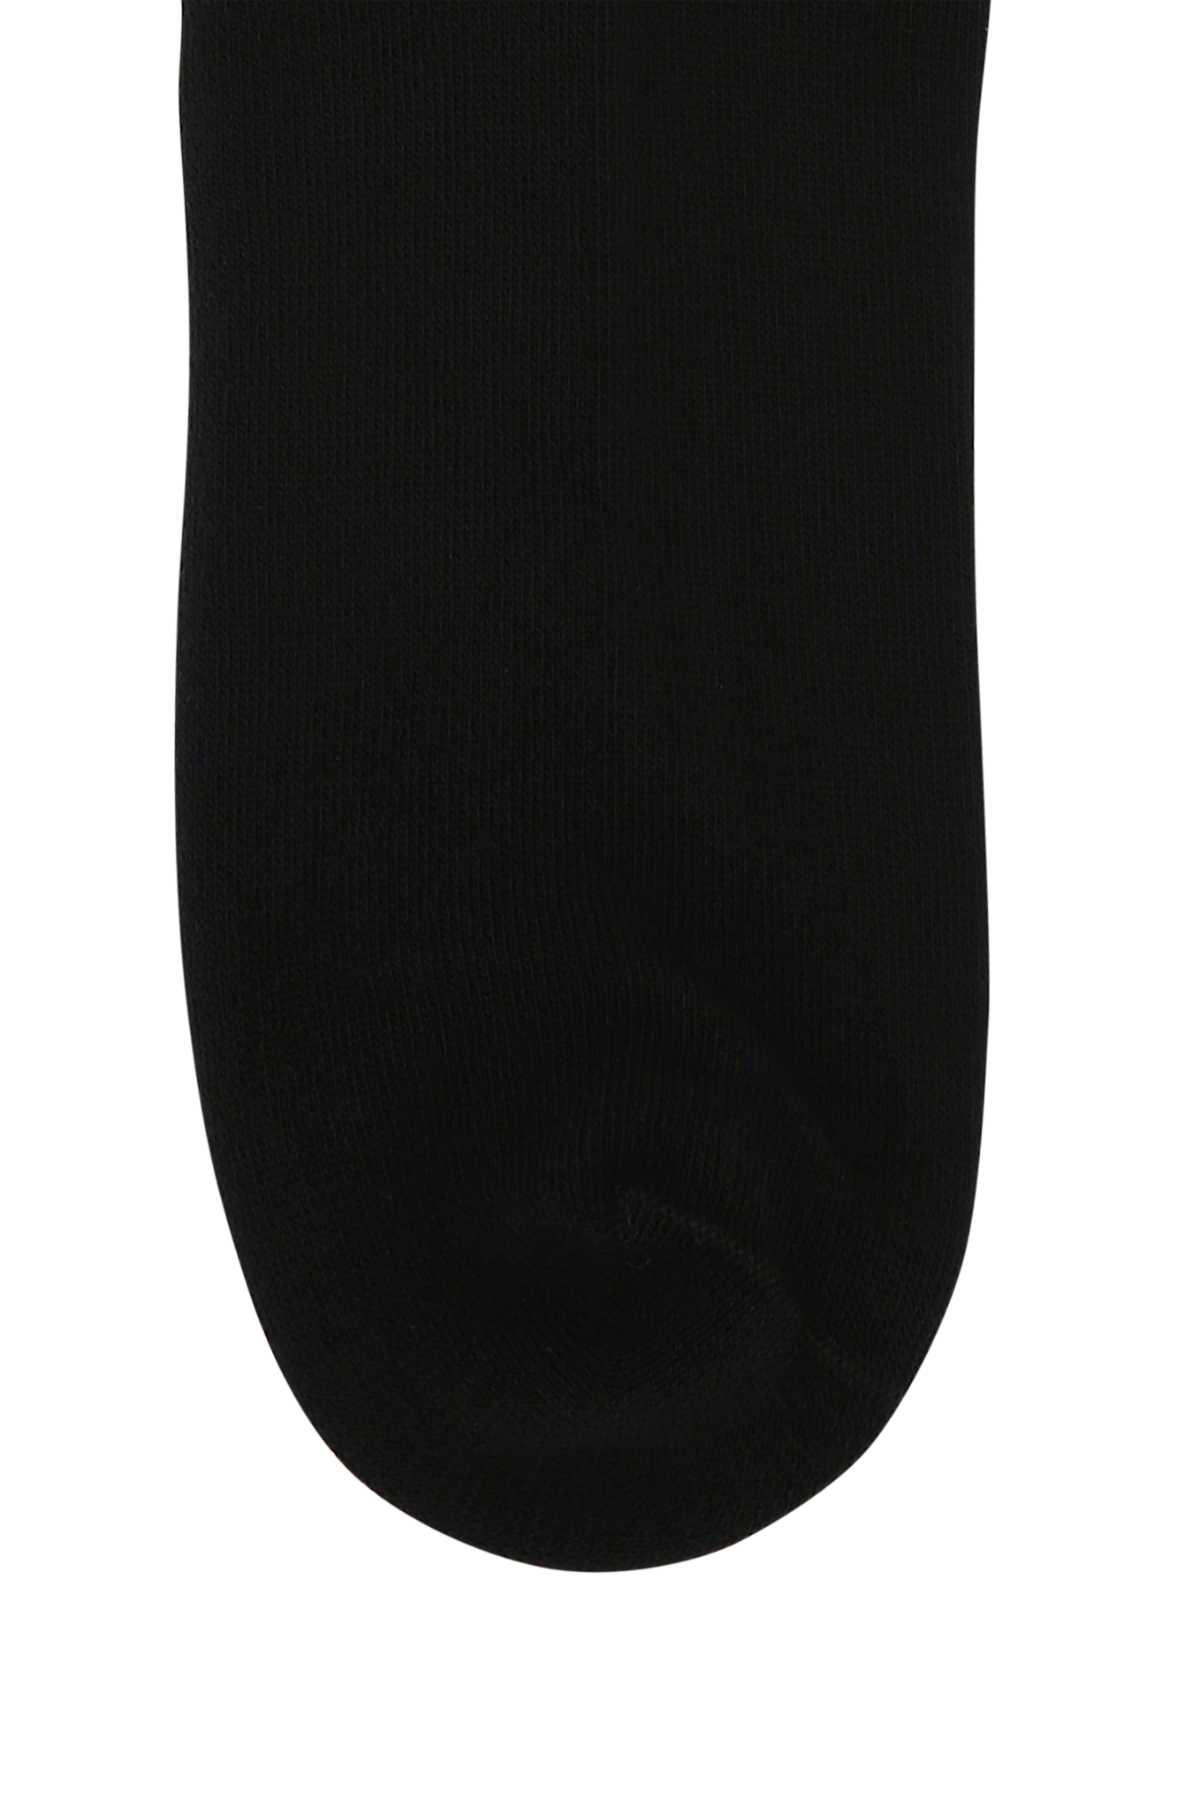 Versace Black Stretch Cotton Blend Socks In 2b150